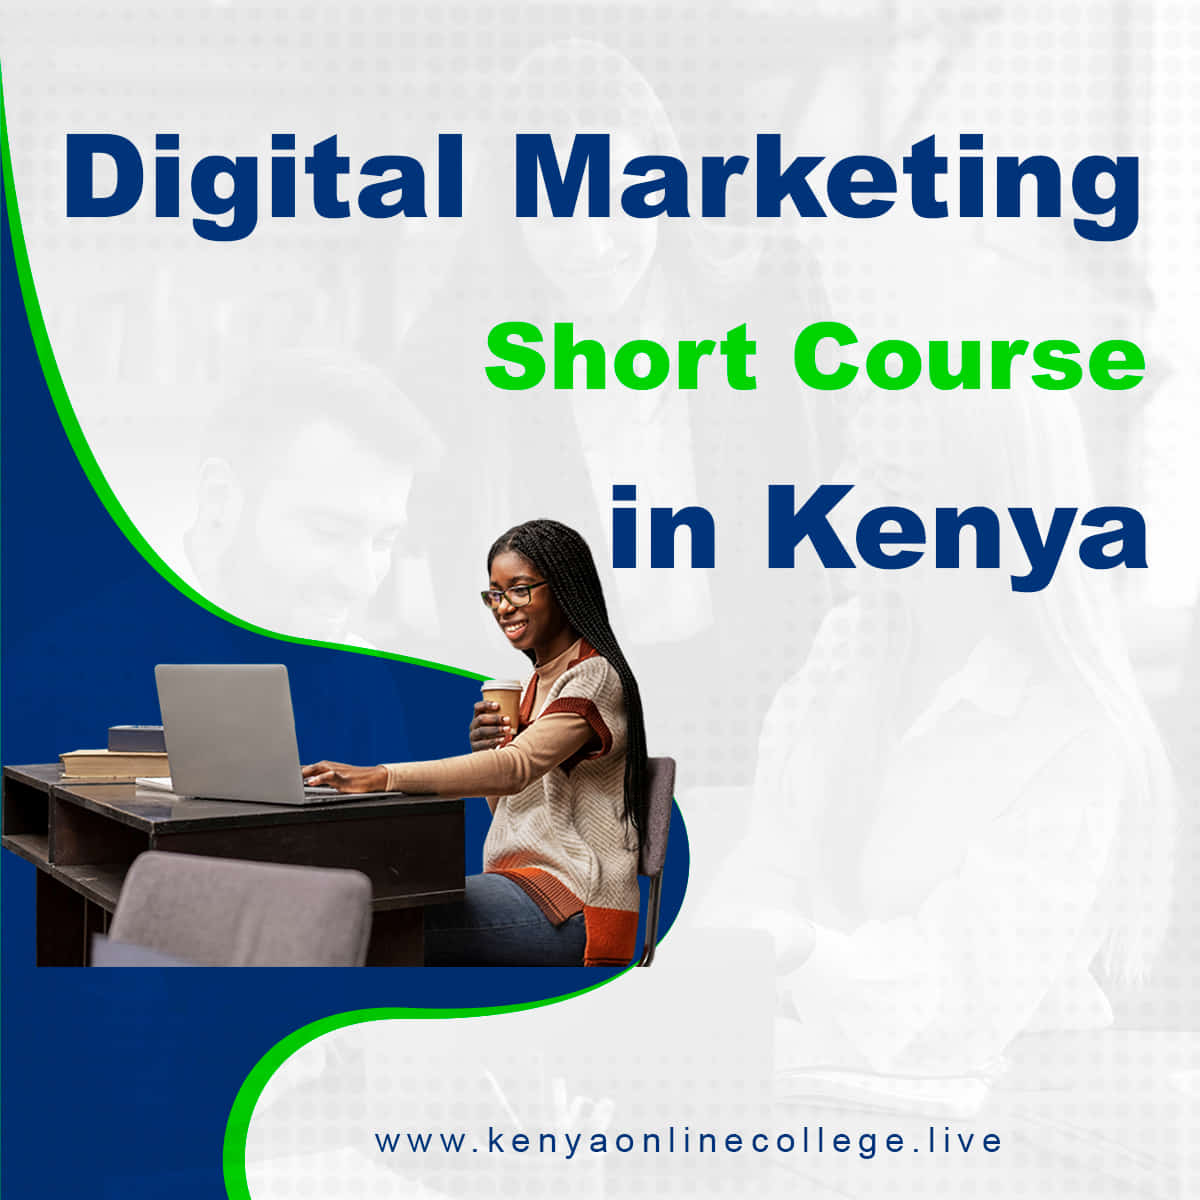 Digital marketing short course in Kenya